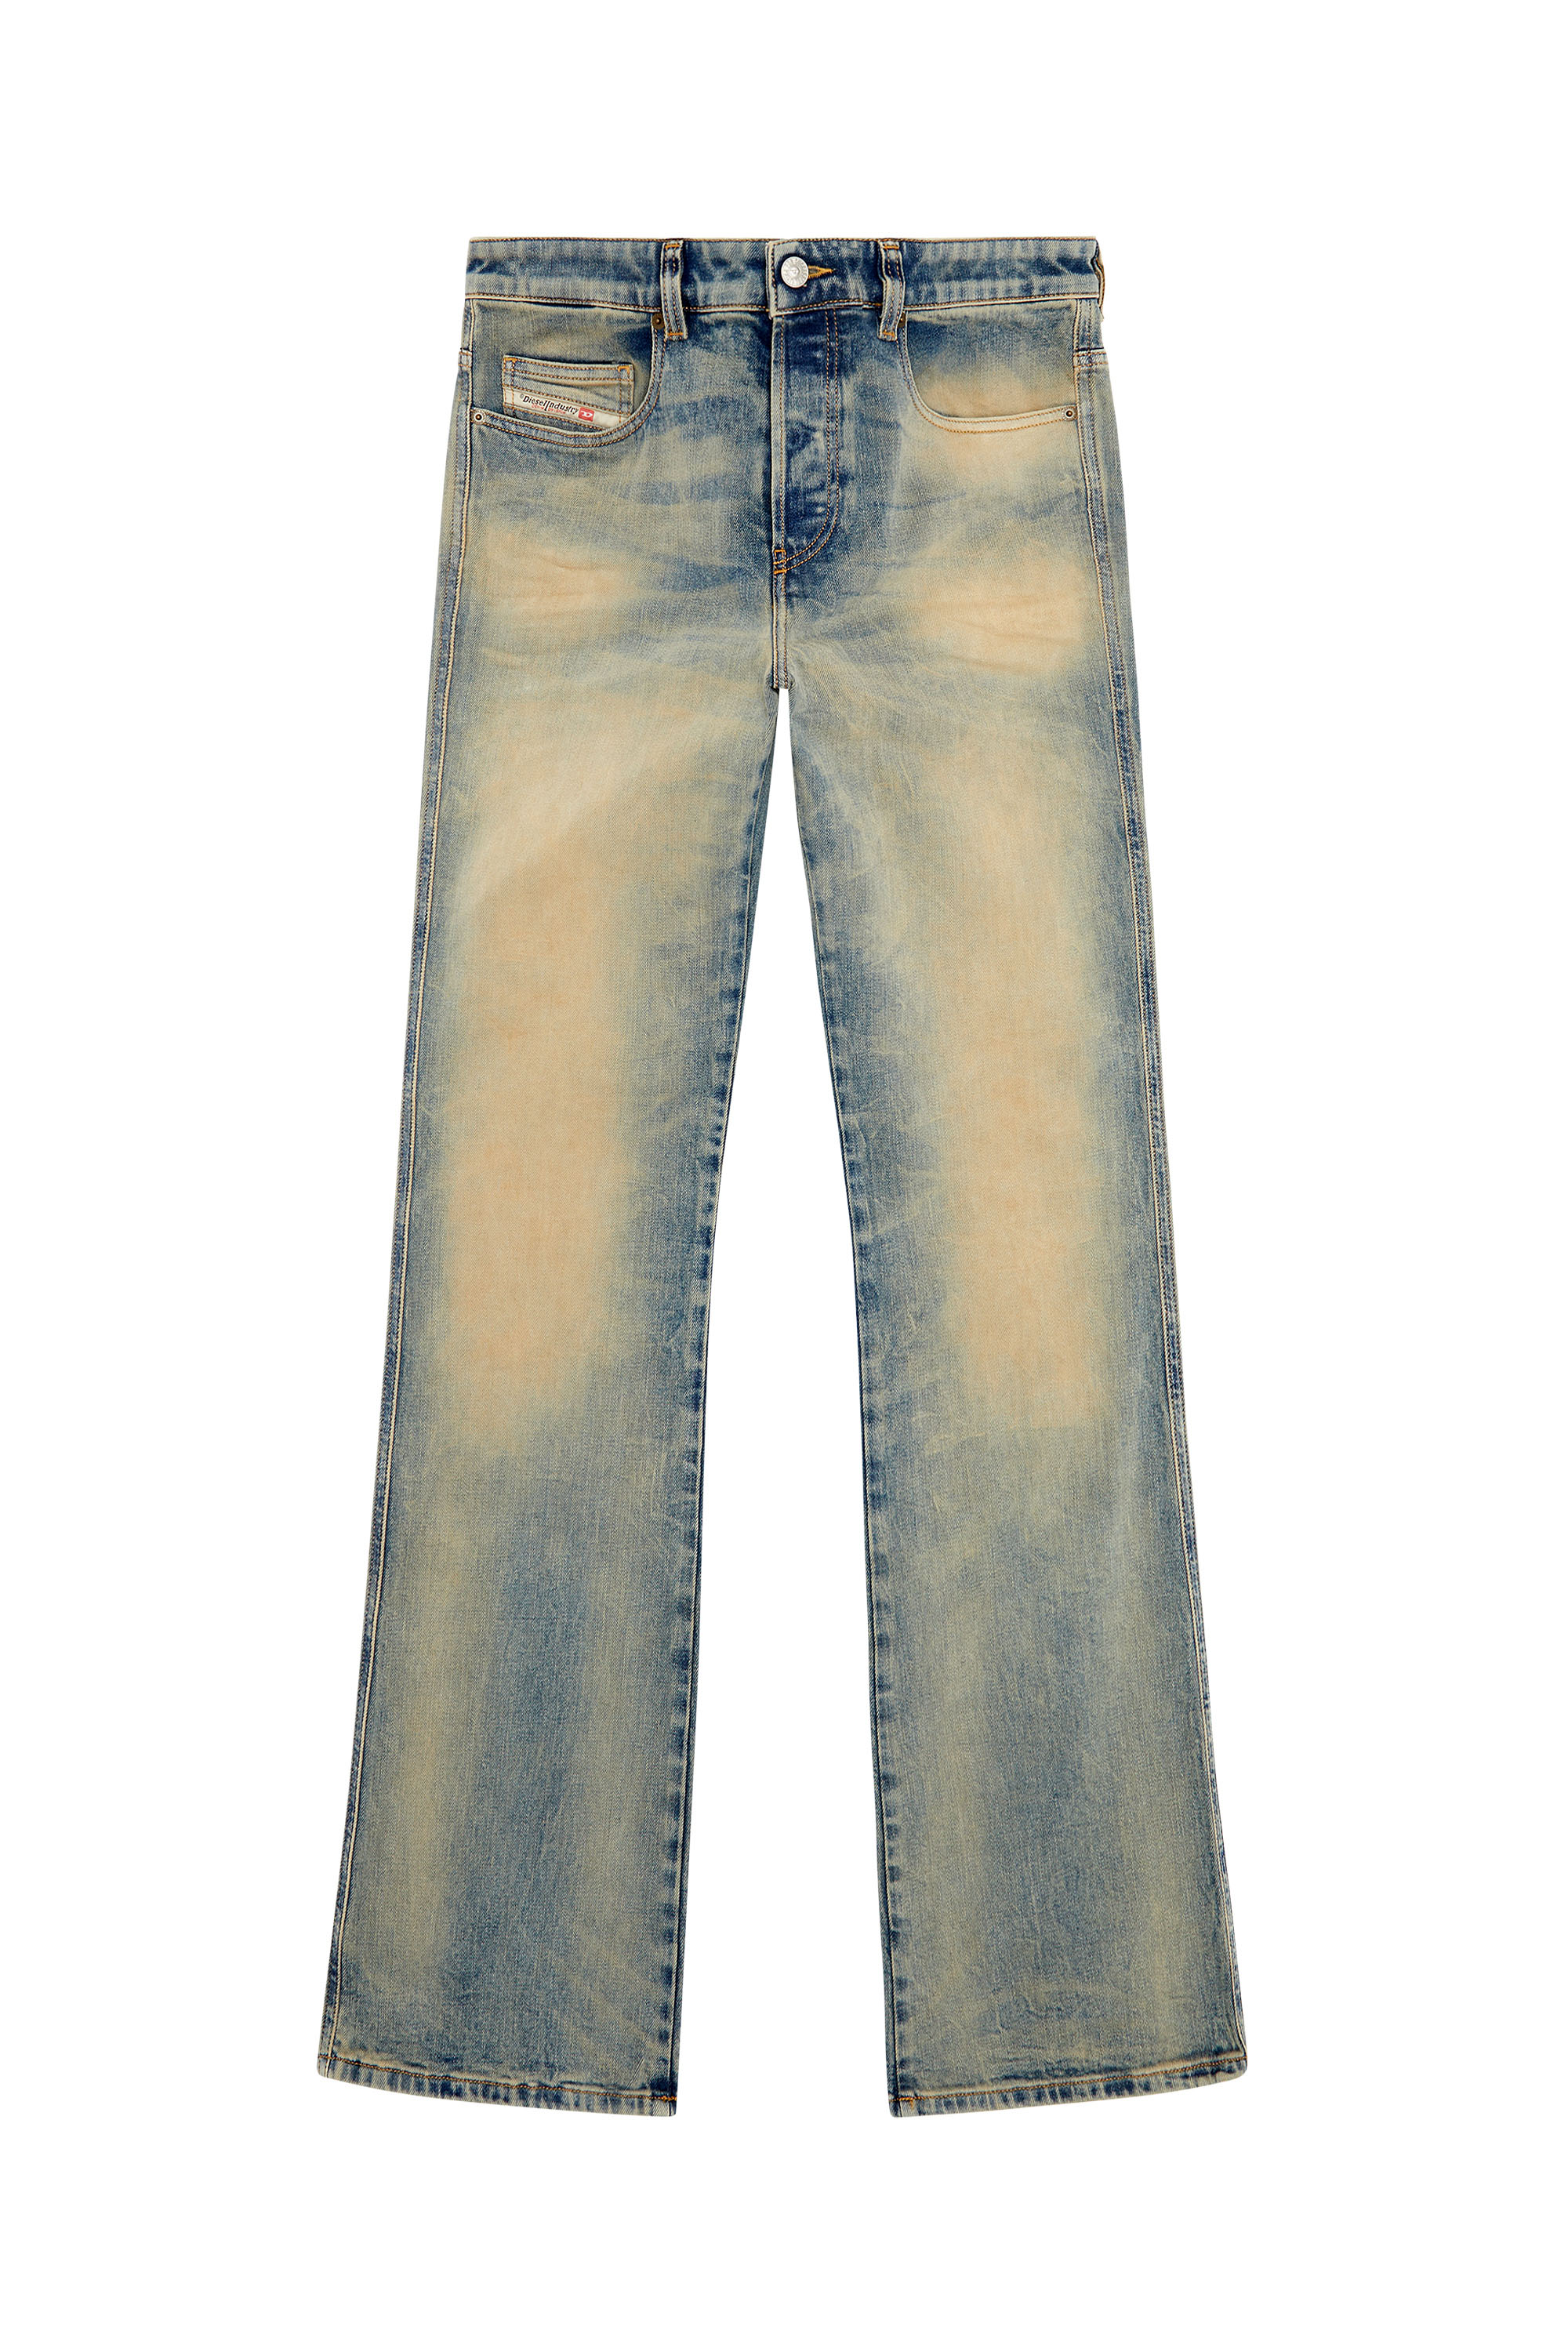 Diesel - Bootcut Jeans 1998 D-Buck 09H78, Hombre Bootcut Jeans - 1998 D-Buck in Azul marino - Image 5